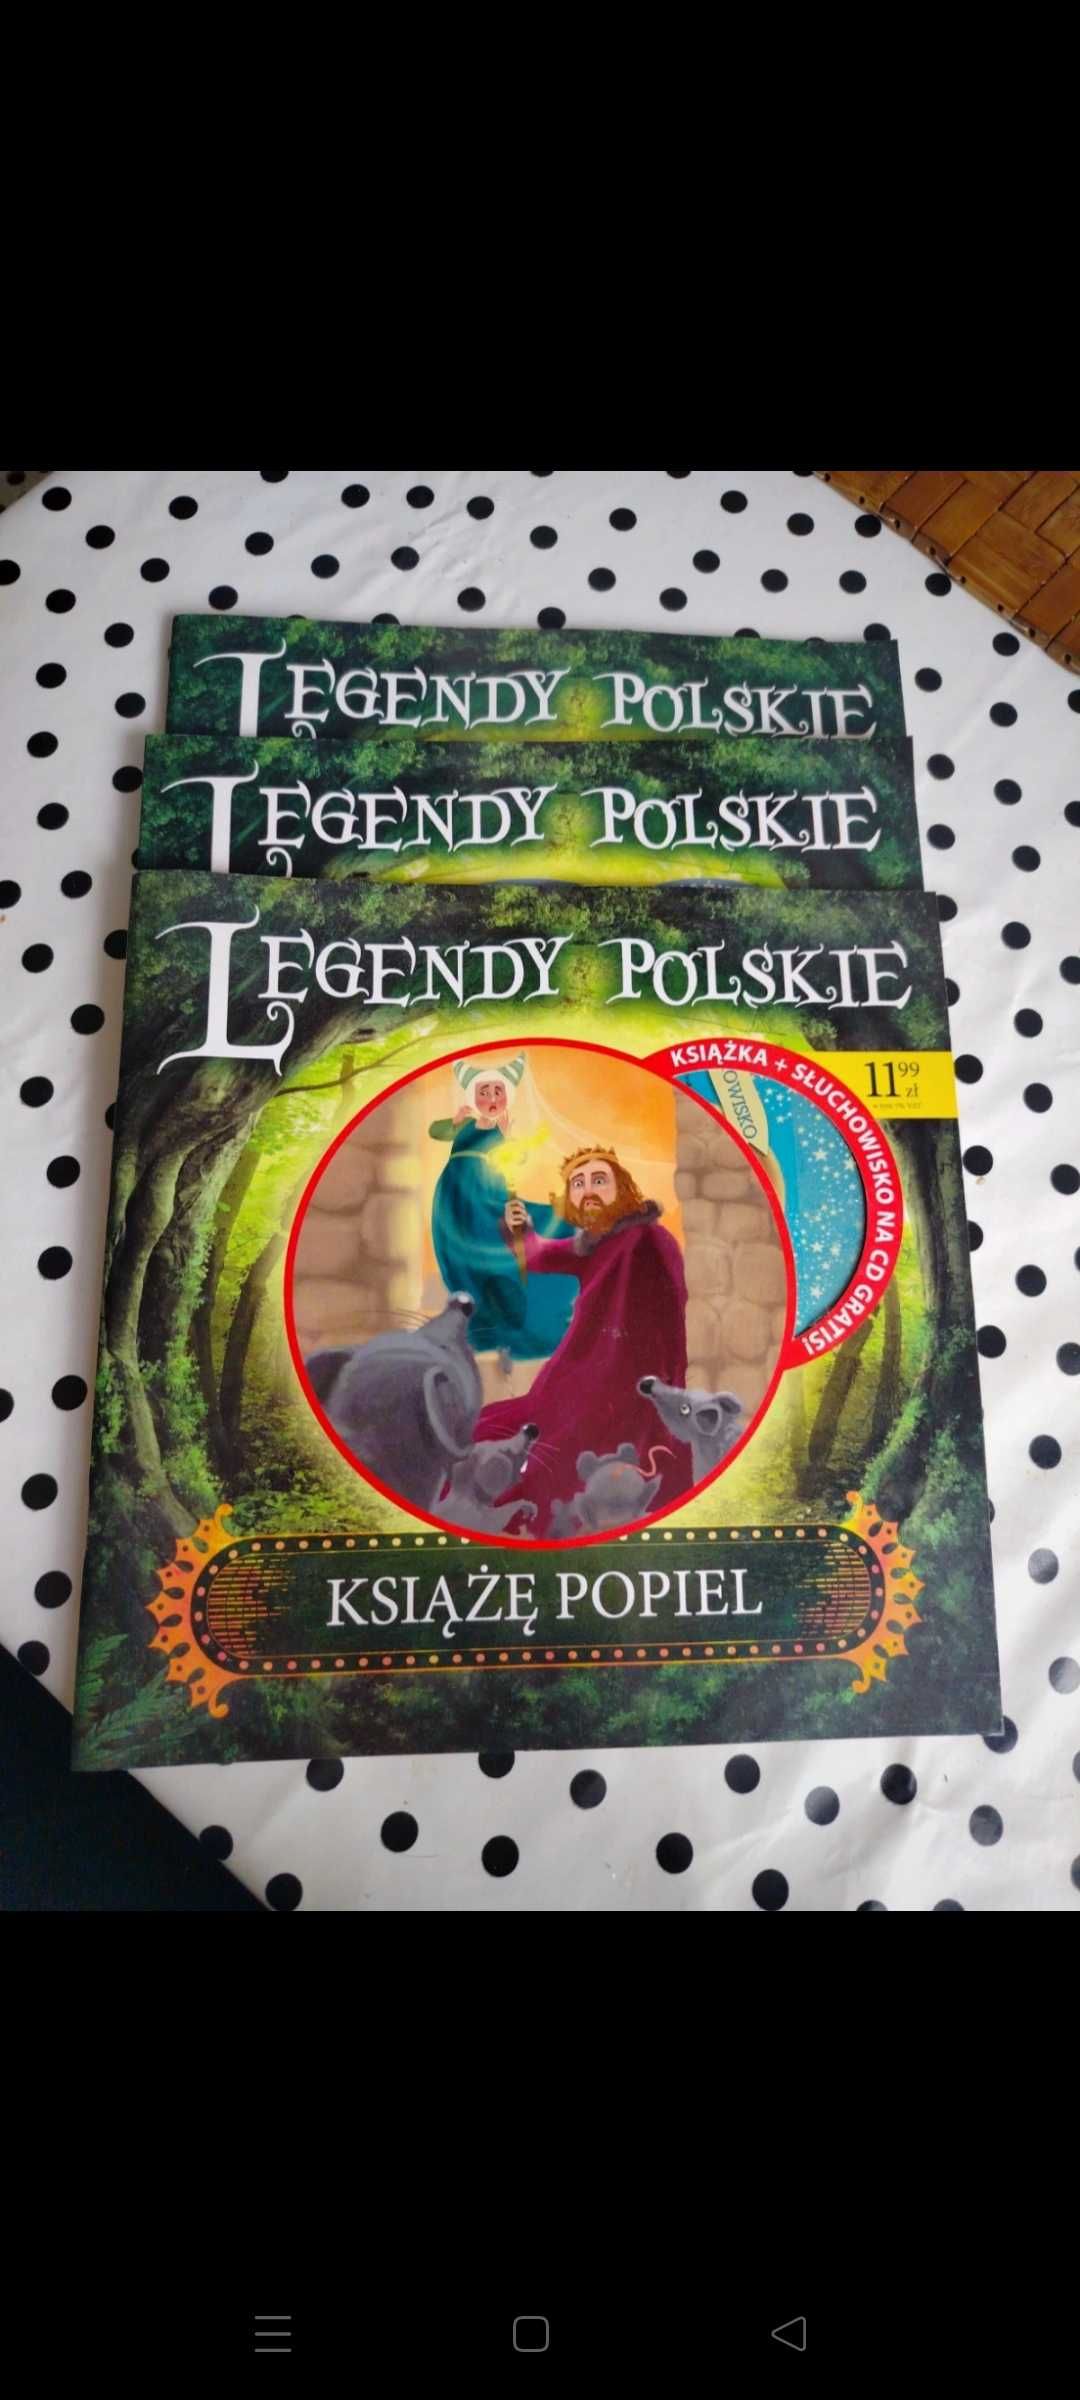 Legendy polskie 3 sztuki